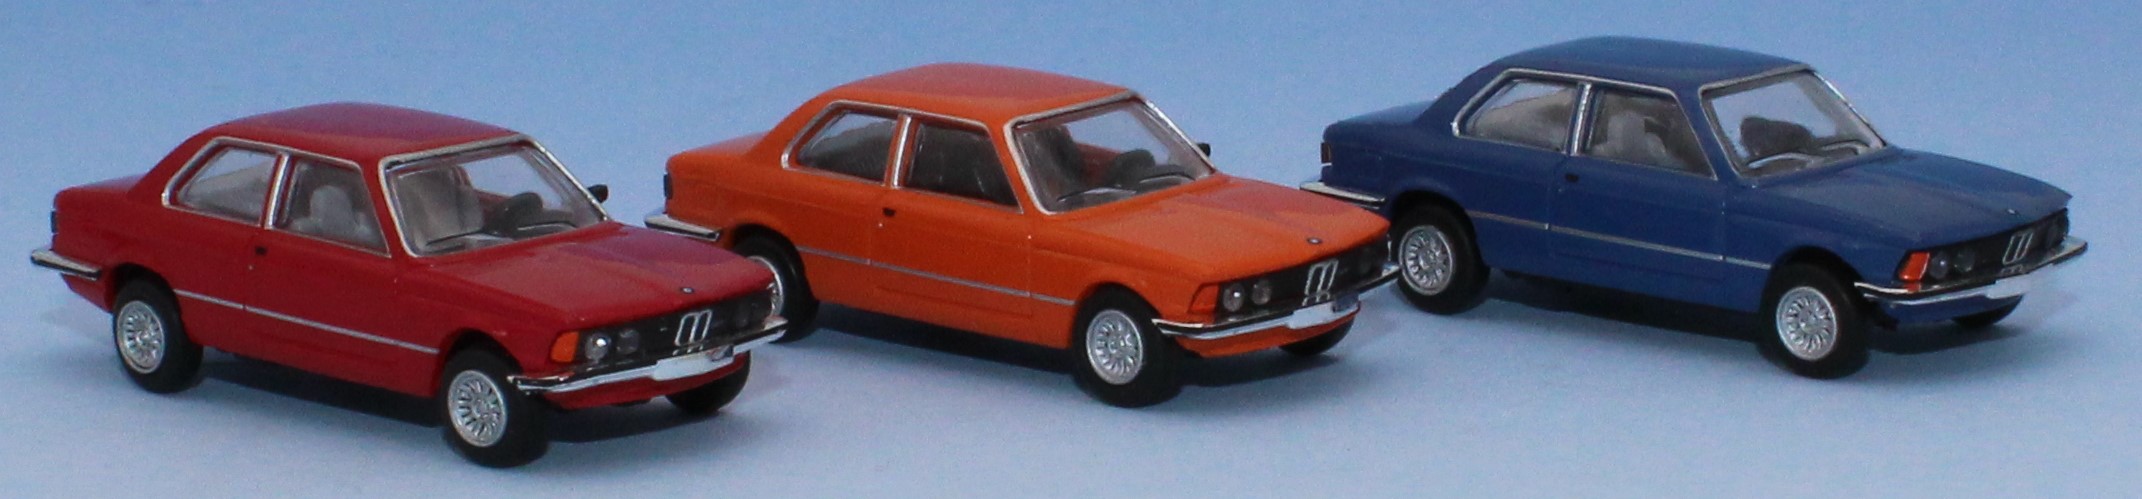 BMW série 3 1ére génération (E21) (1975 - 1983)